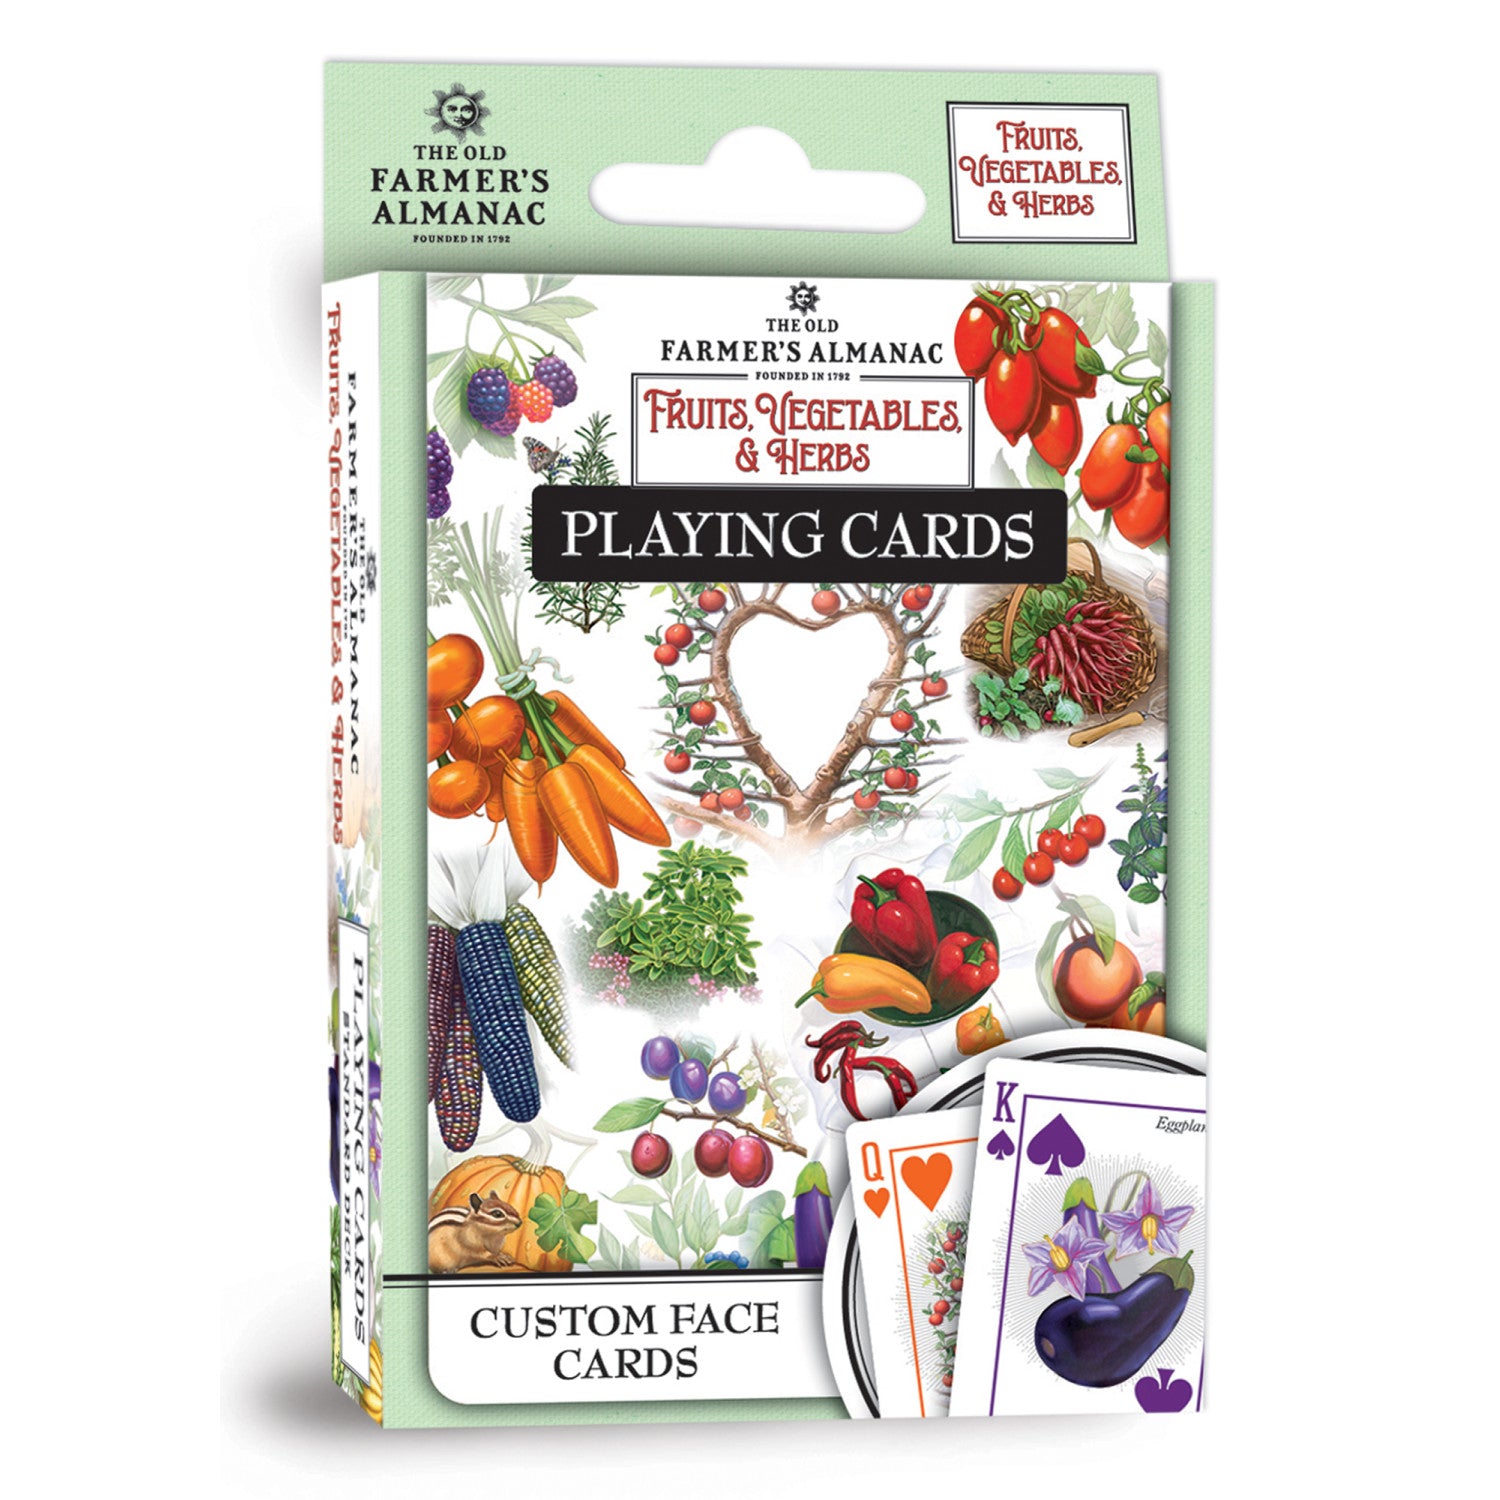 Farmer's Almanac - Fruits, Vegetables, & Herbs Playing Cards - 54 Card Deck